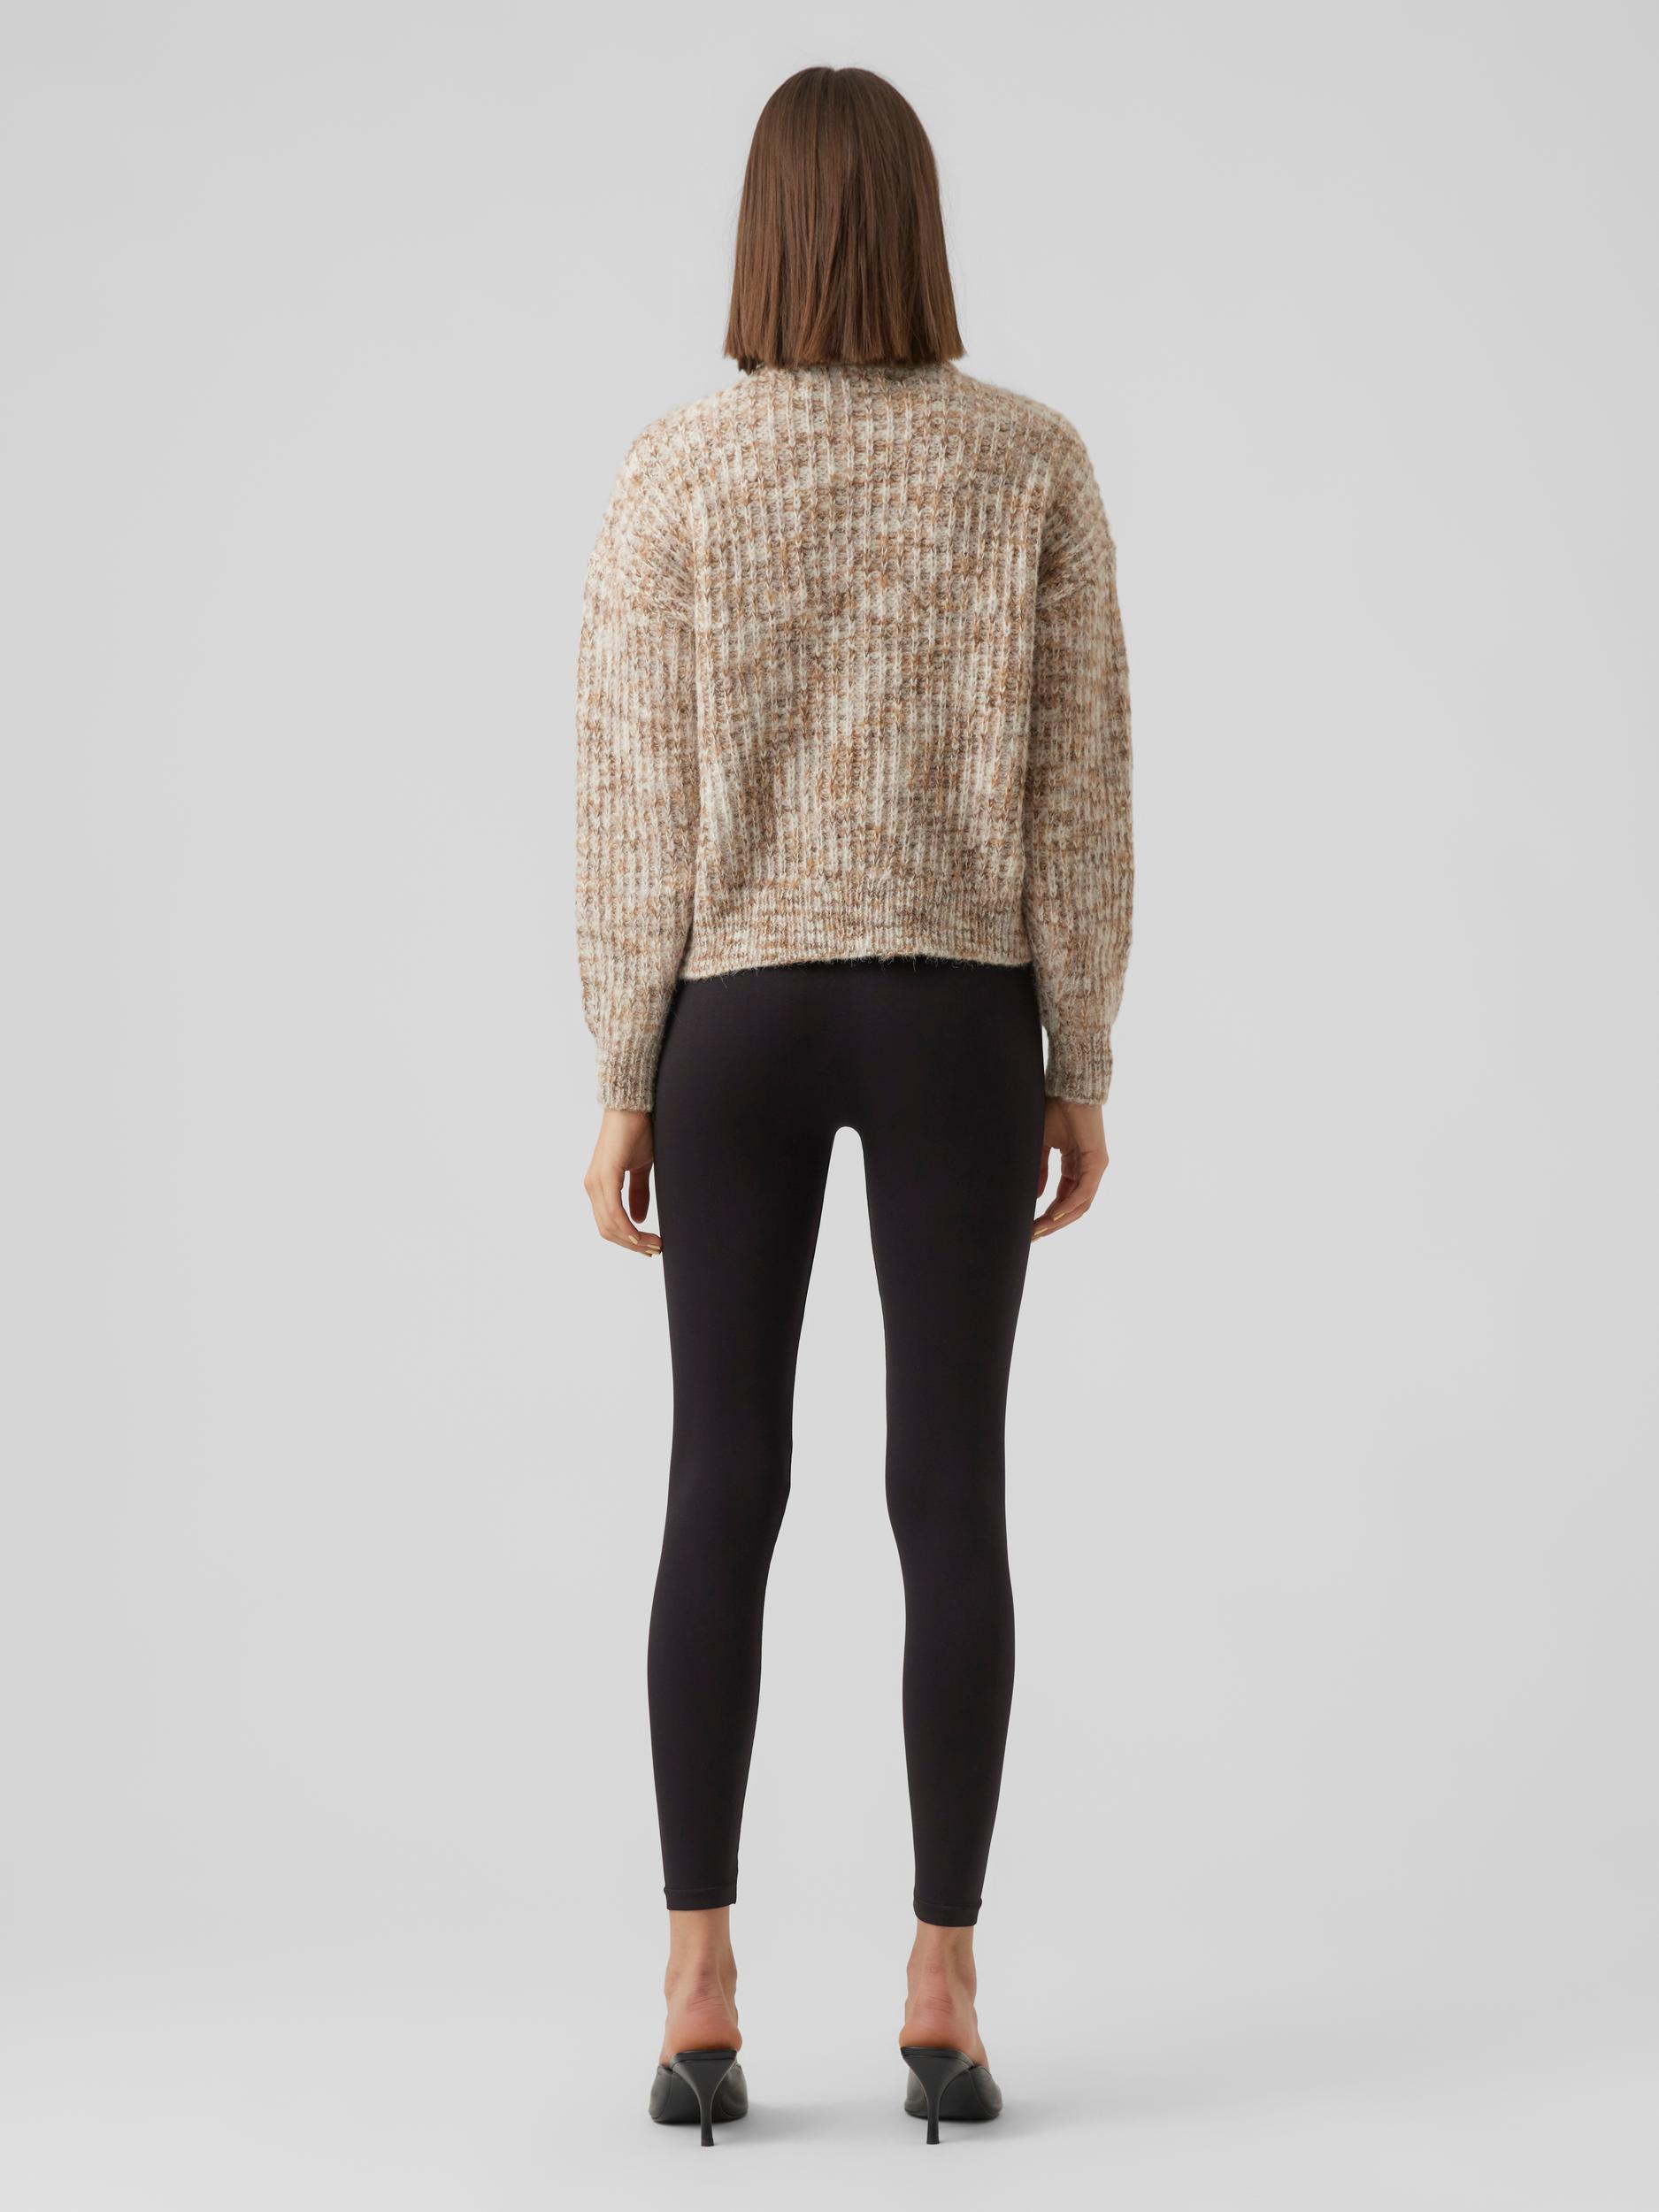 FINAL SALE- Claudia high-neck half-zip sweater, AZTEC, large